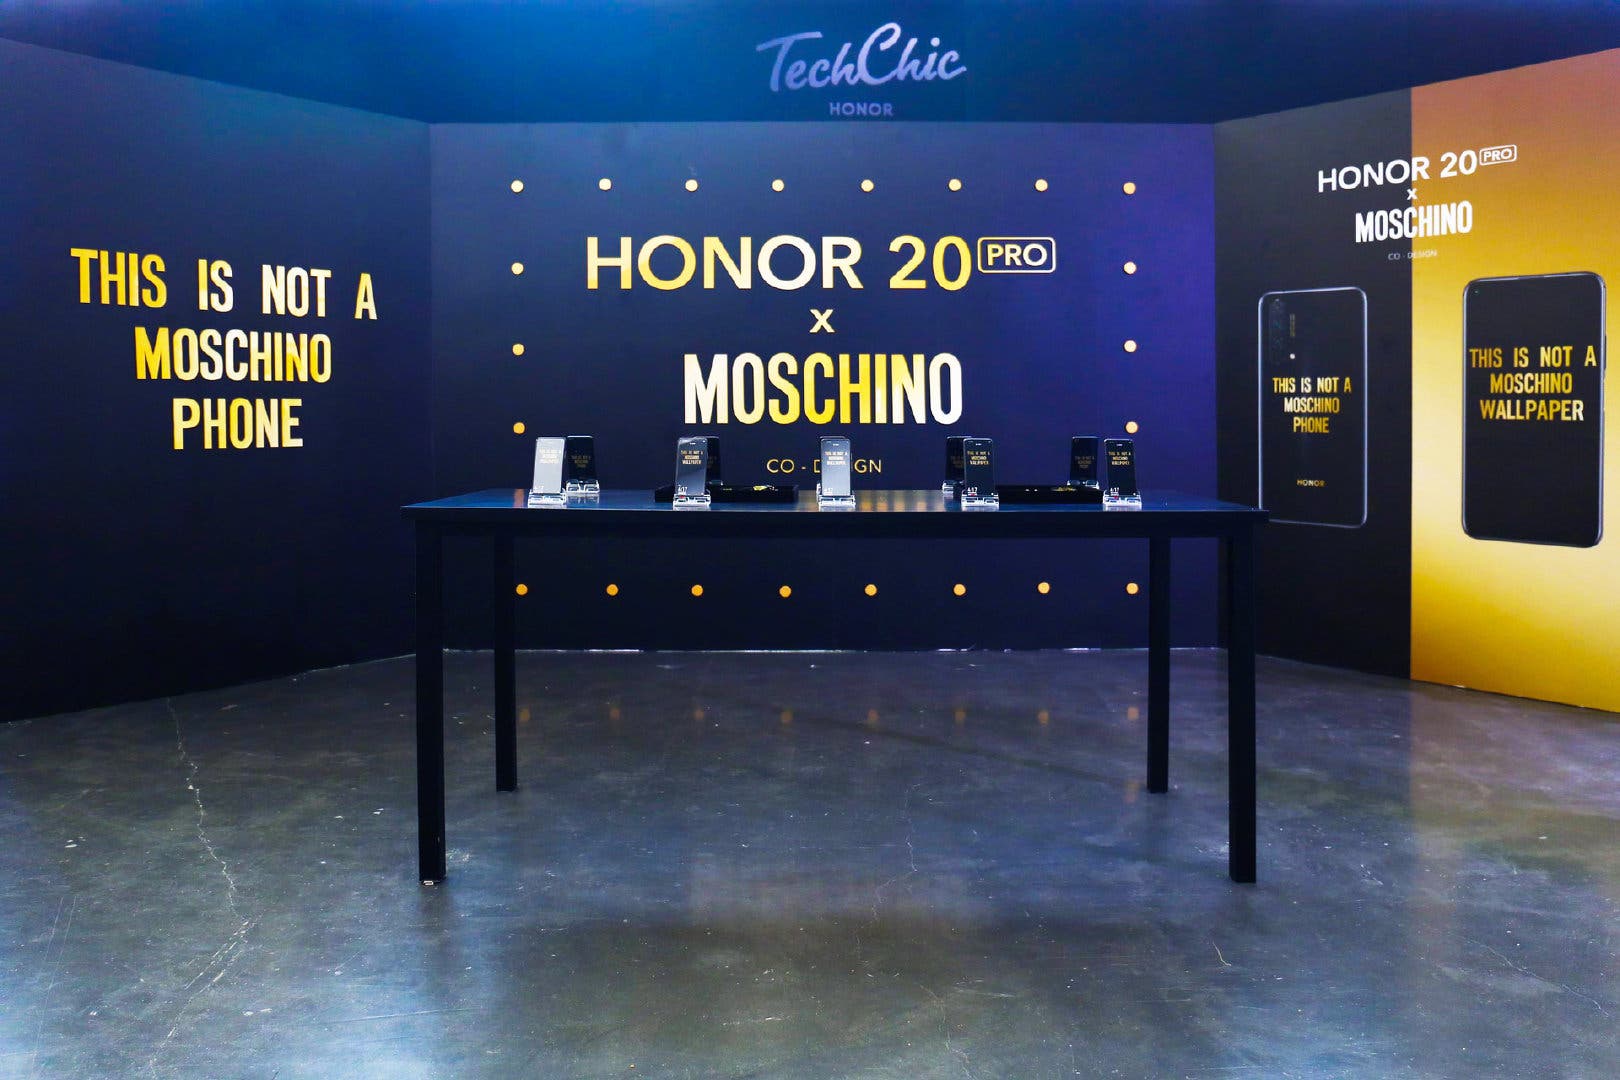 Honor 20 Pro Moschino Edition arrives tomorrow